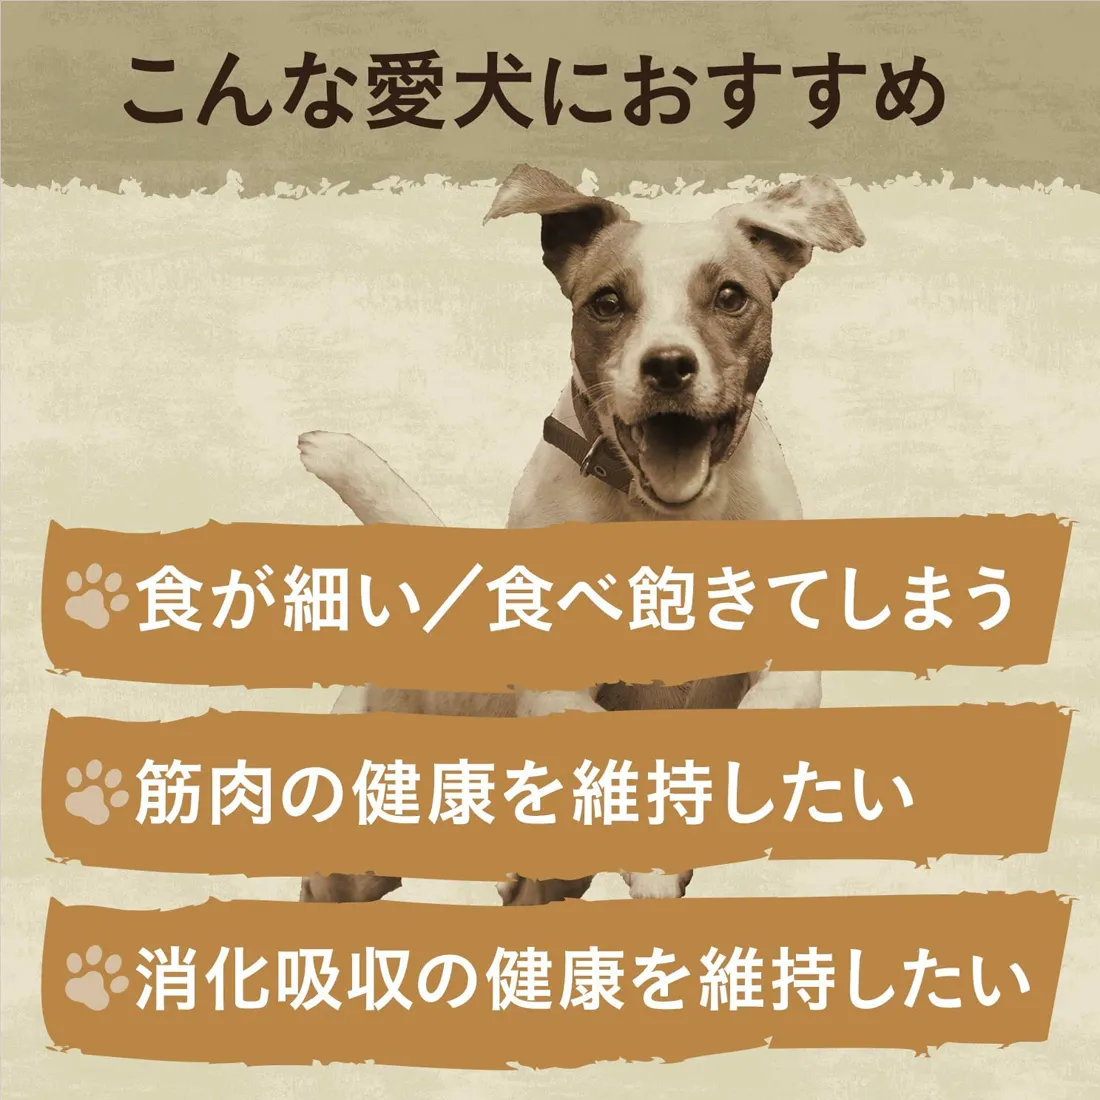 Nutro ワイルドレシピ超小型犬～小型犬用 [成犬用] チキン